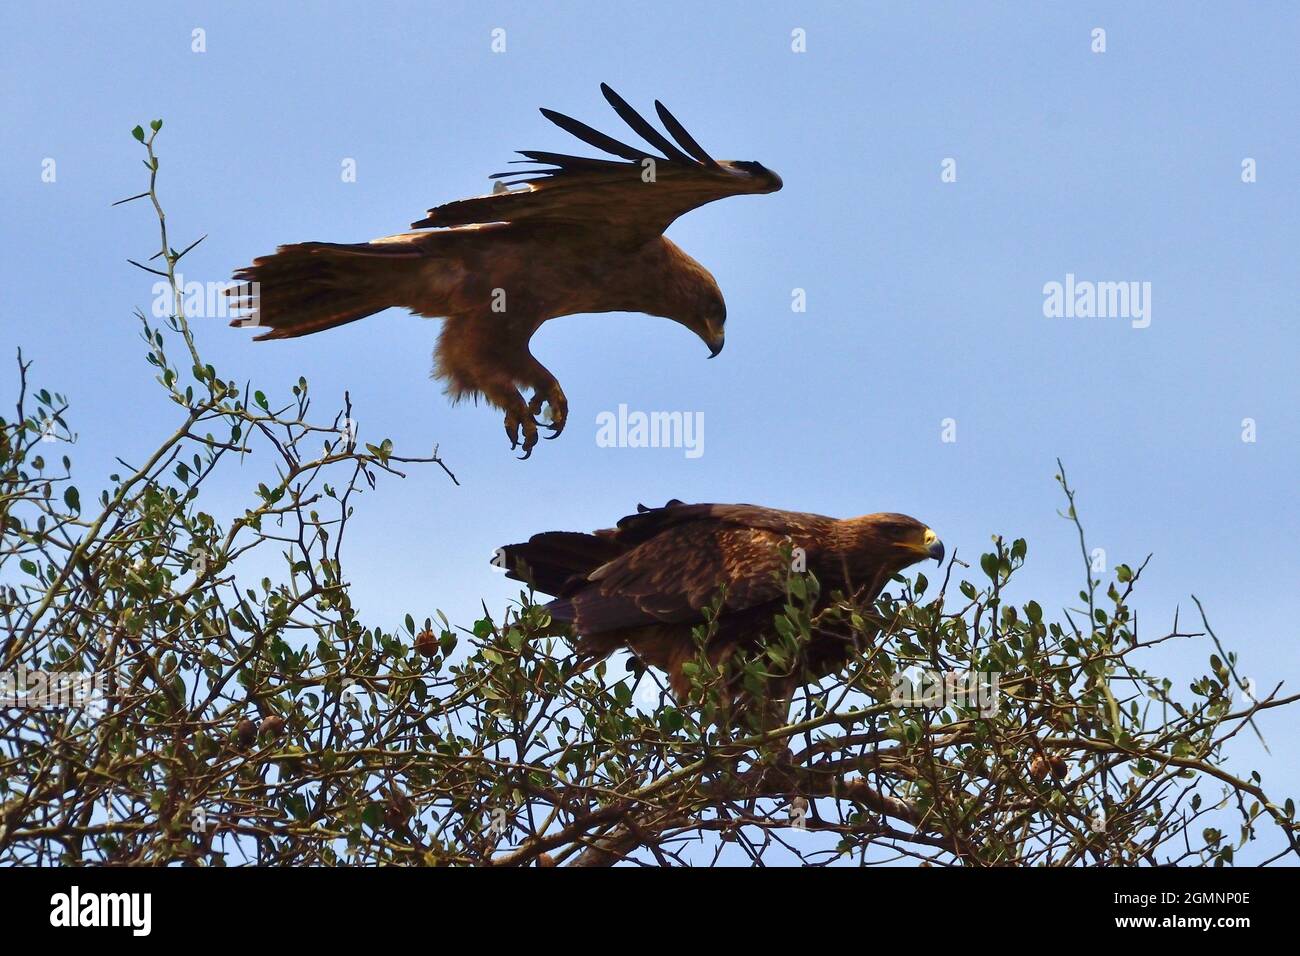 Steppenadler, steppe eagle, Aquila nipalensis, Seronera, Serengeti Nationalpark, Tansania, Ostafrika, tanzania, east africa Stock Photo